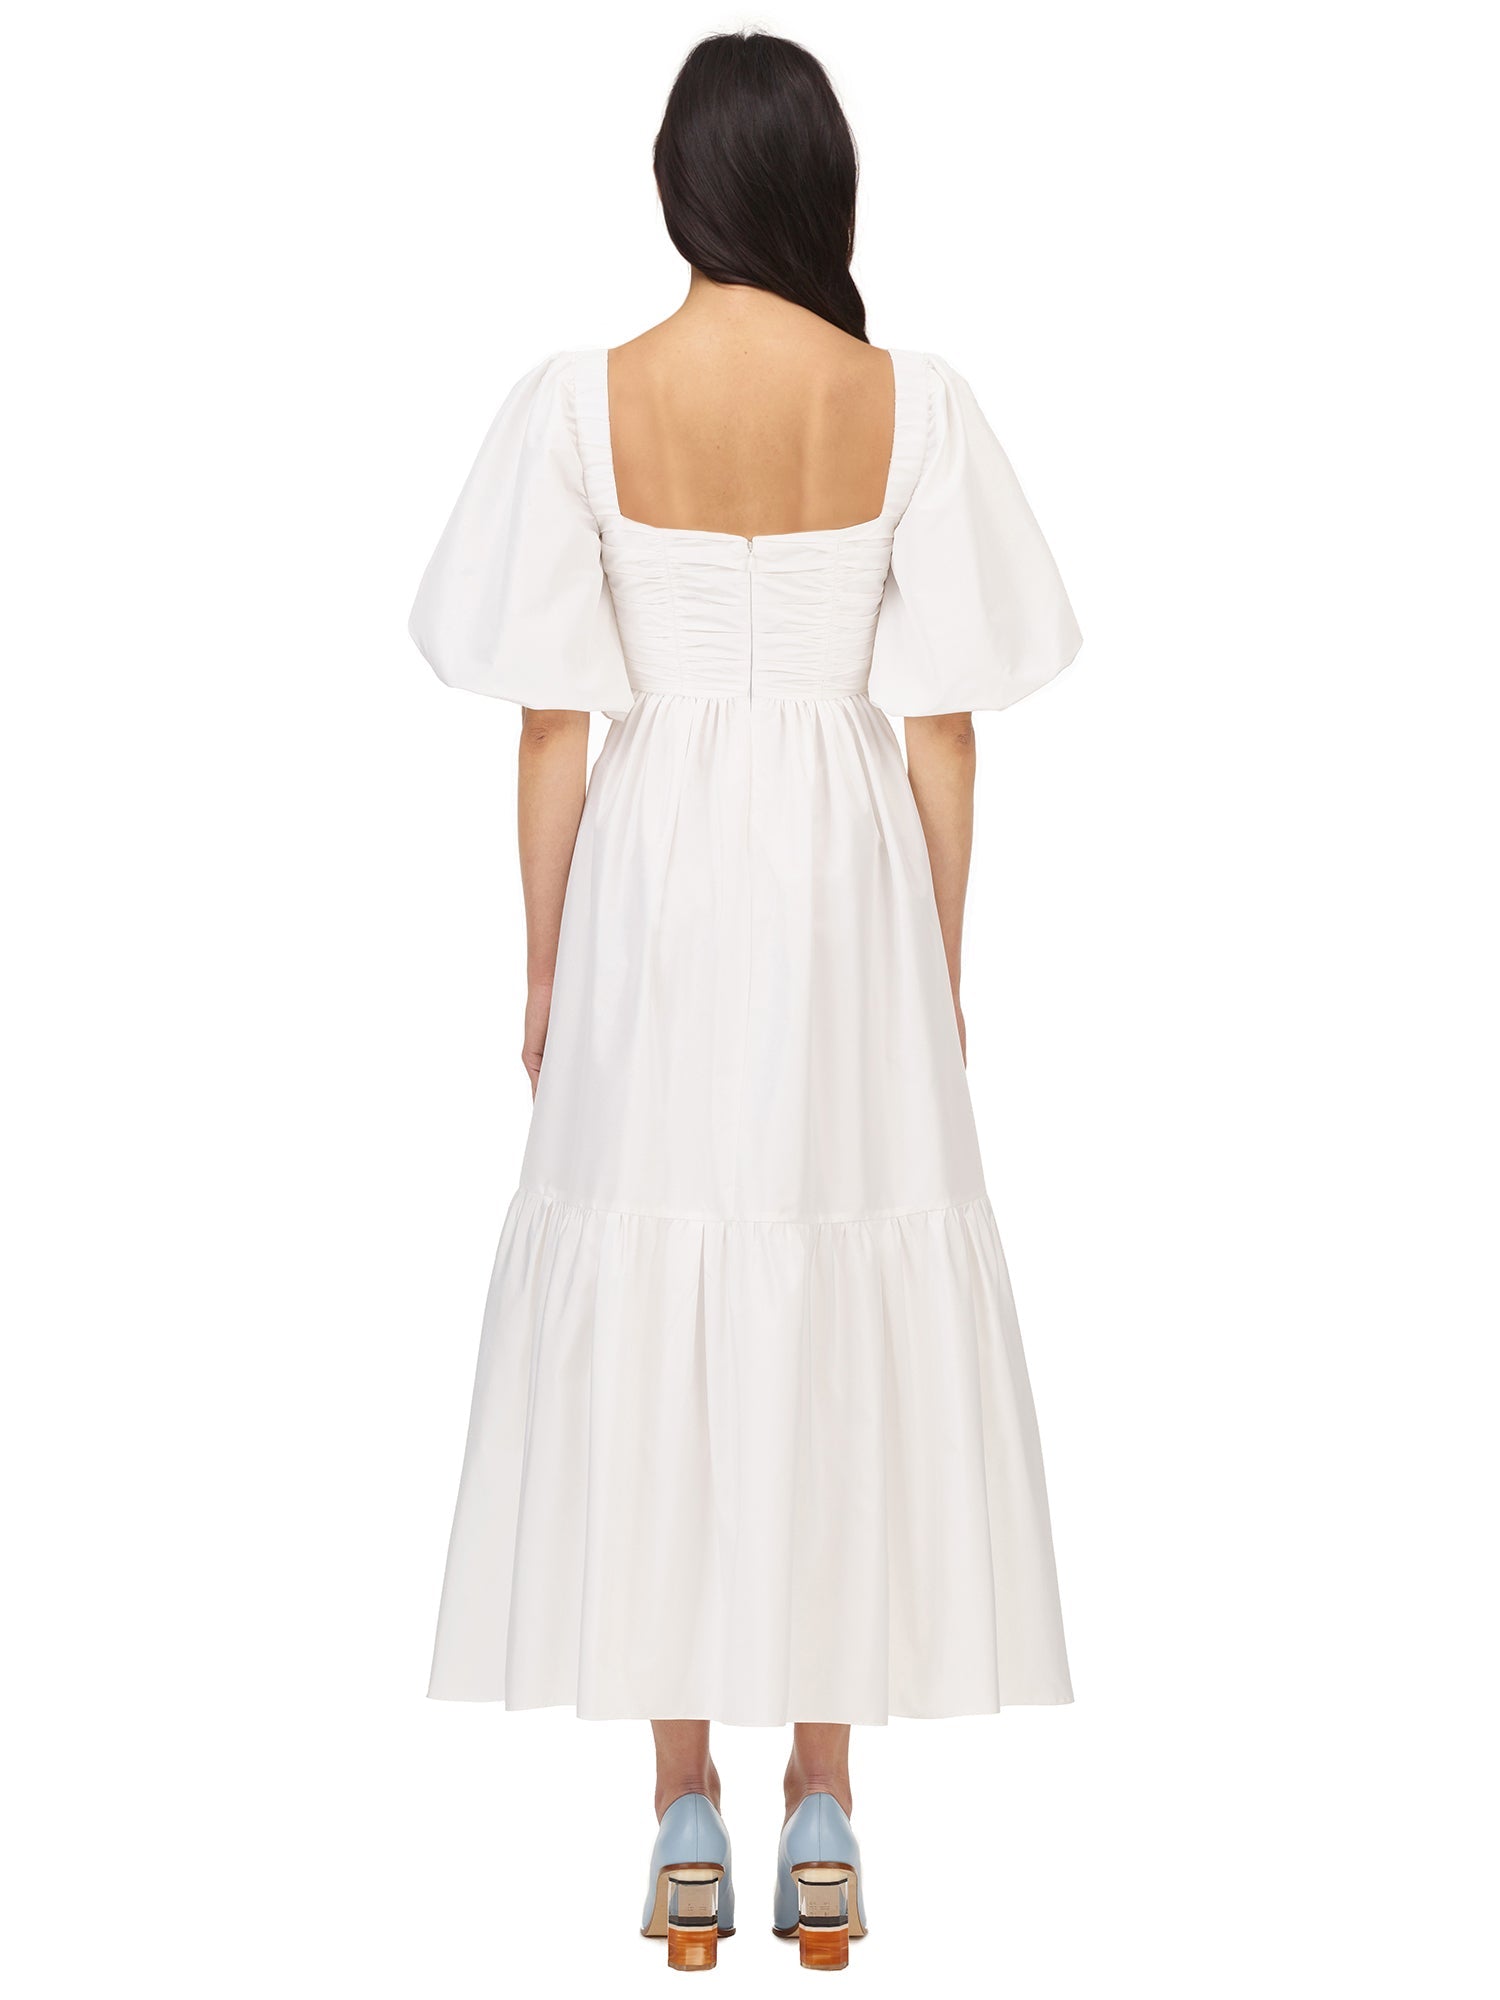 A woman wearing the White Taffeta Puff Sleeve Midi Dress